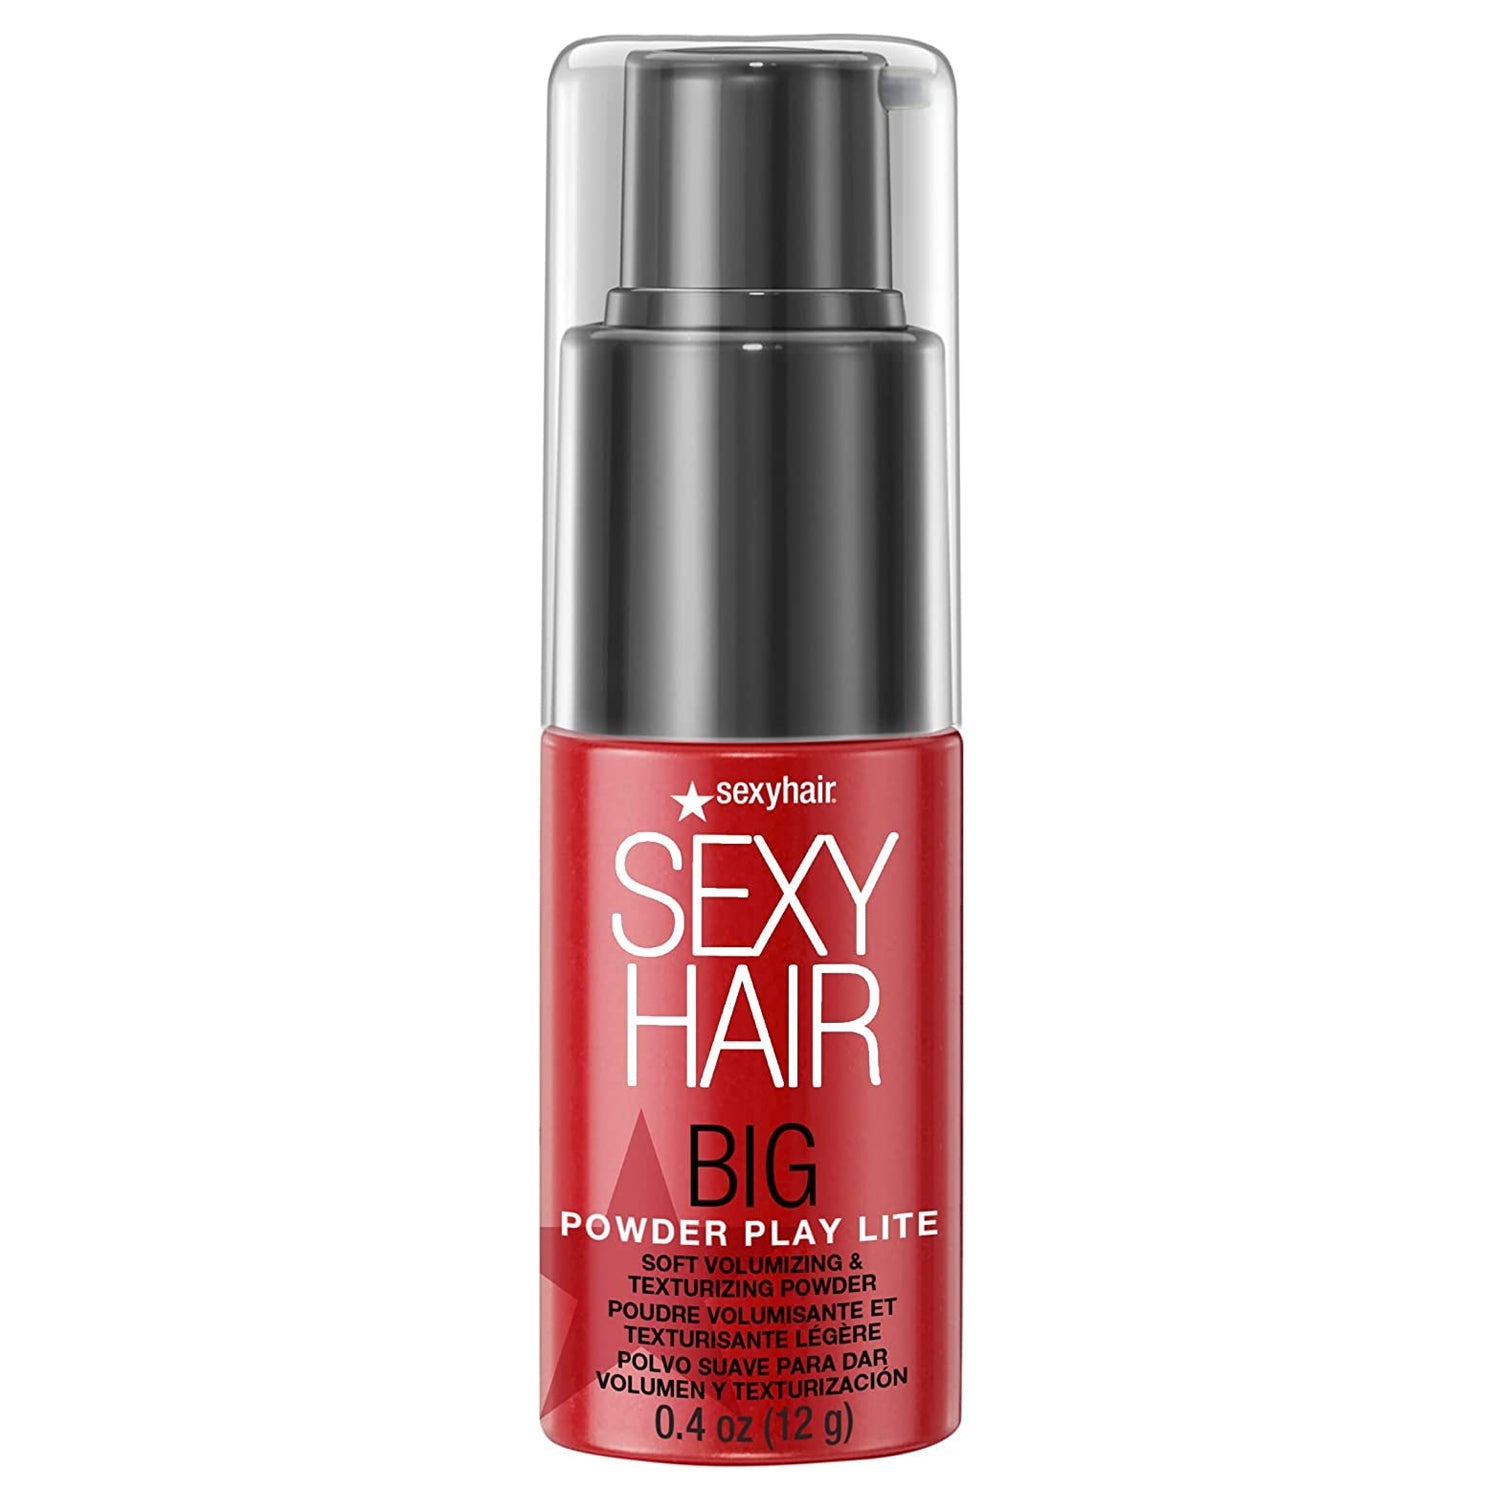 Big Sexy Hair Powder Play Lite Soft Volumizing & Texturizing Powder 0.4oz / 12g